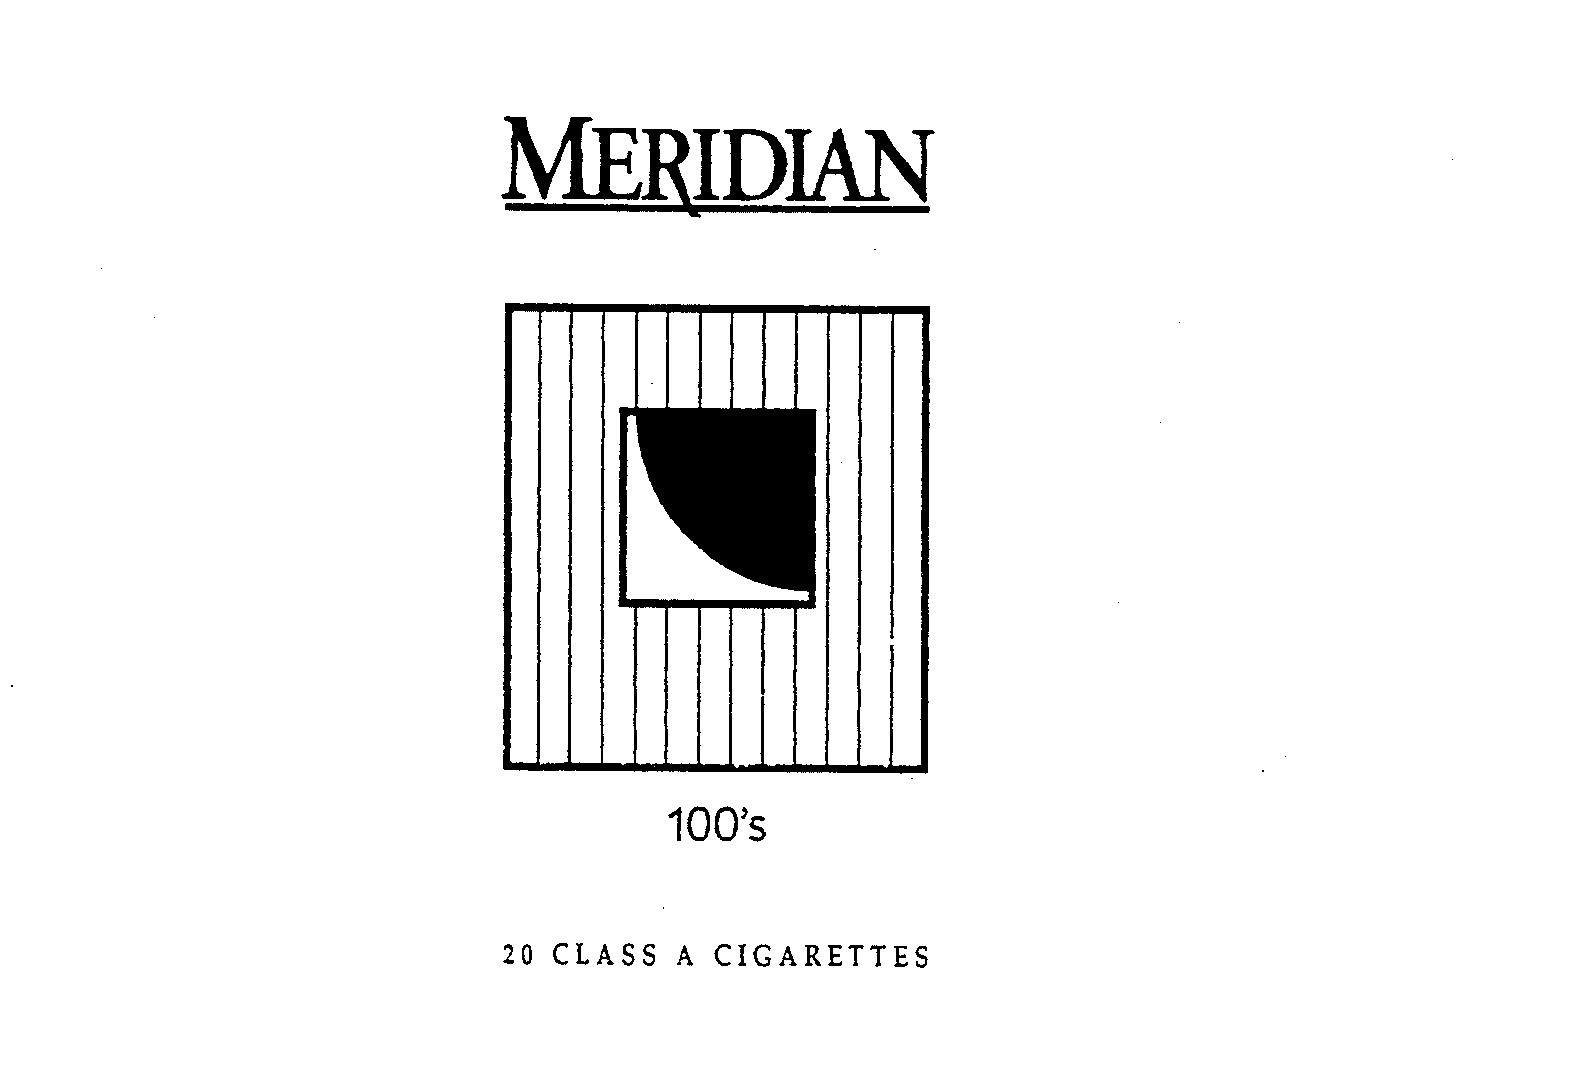  MERIDIAN 100'S 20 CLASS A CIGARETTES